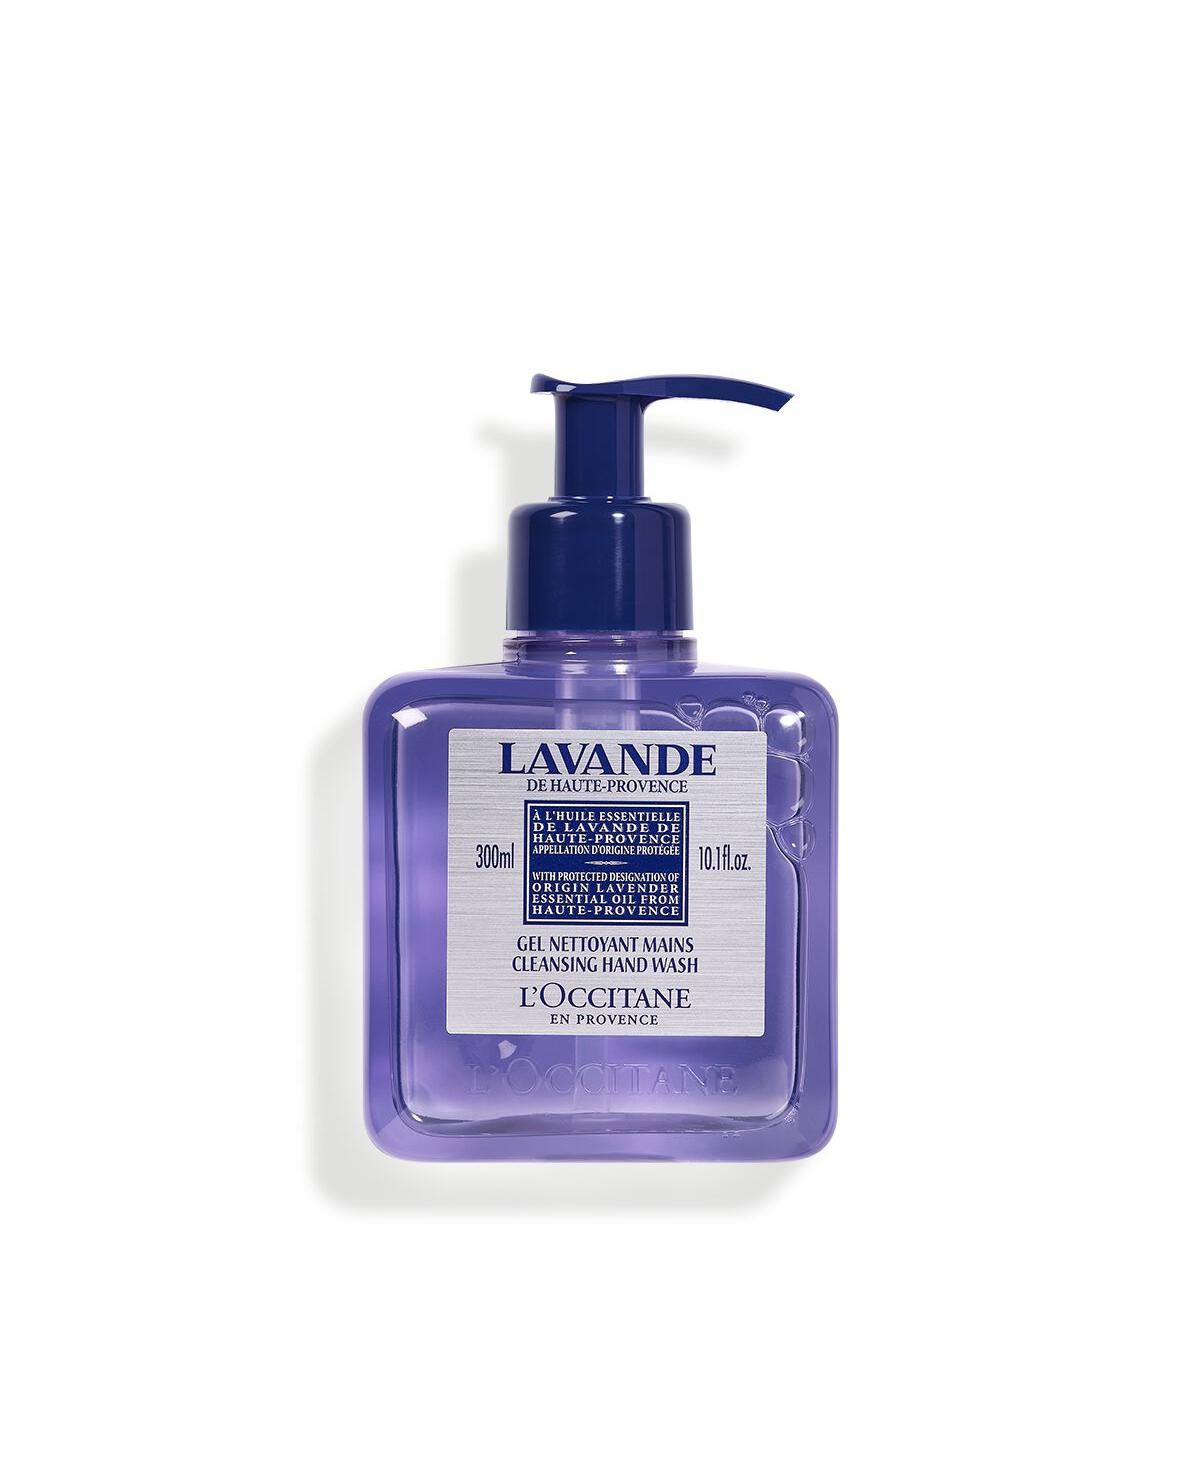 L'occitane Lavender Cleansing Hand Wash 10.10 Fl. oz